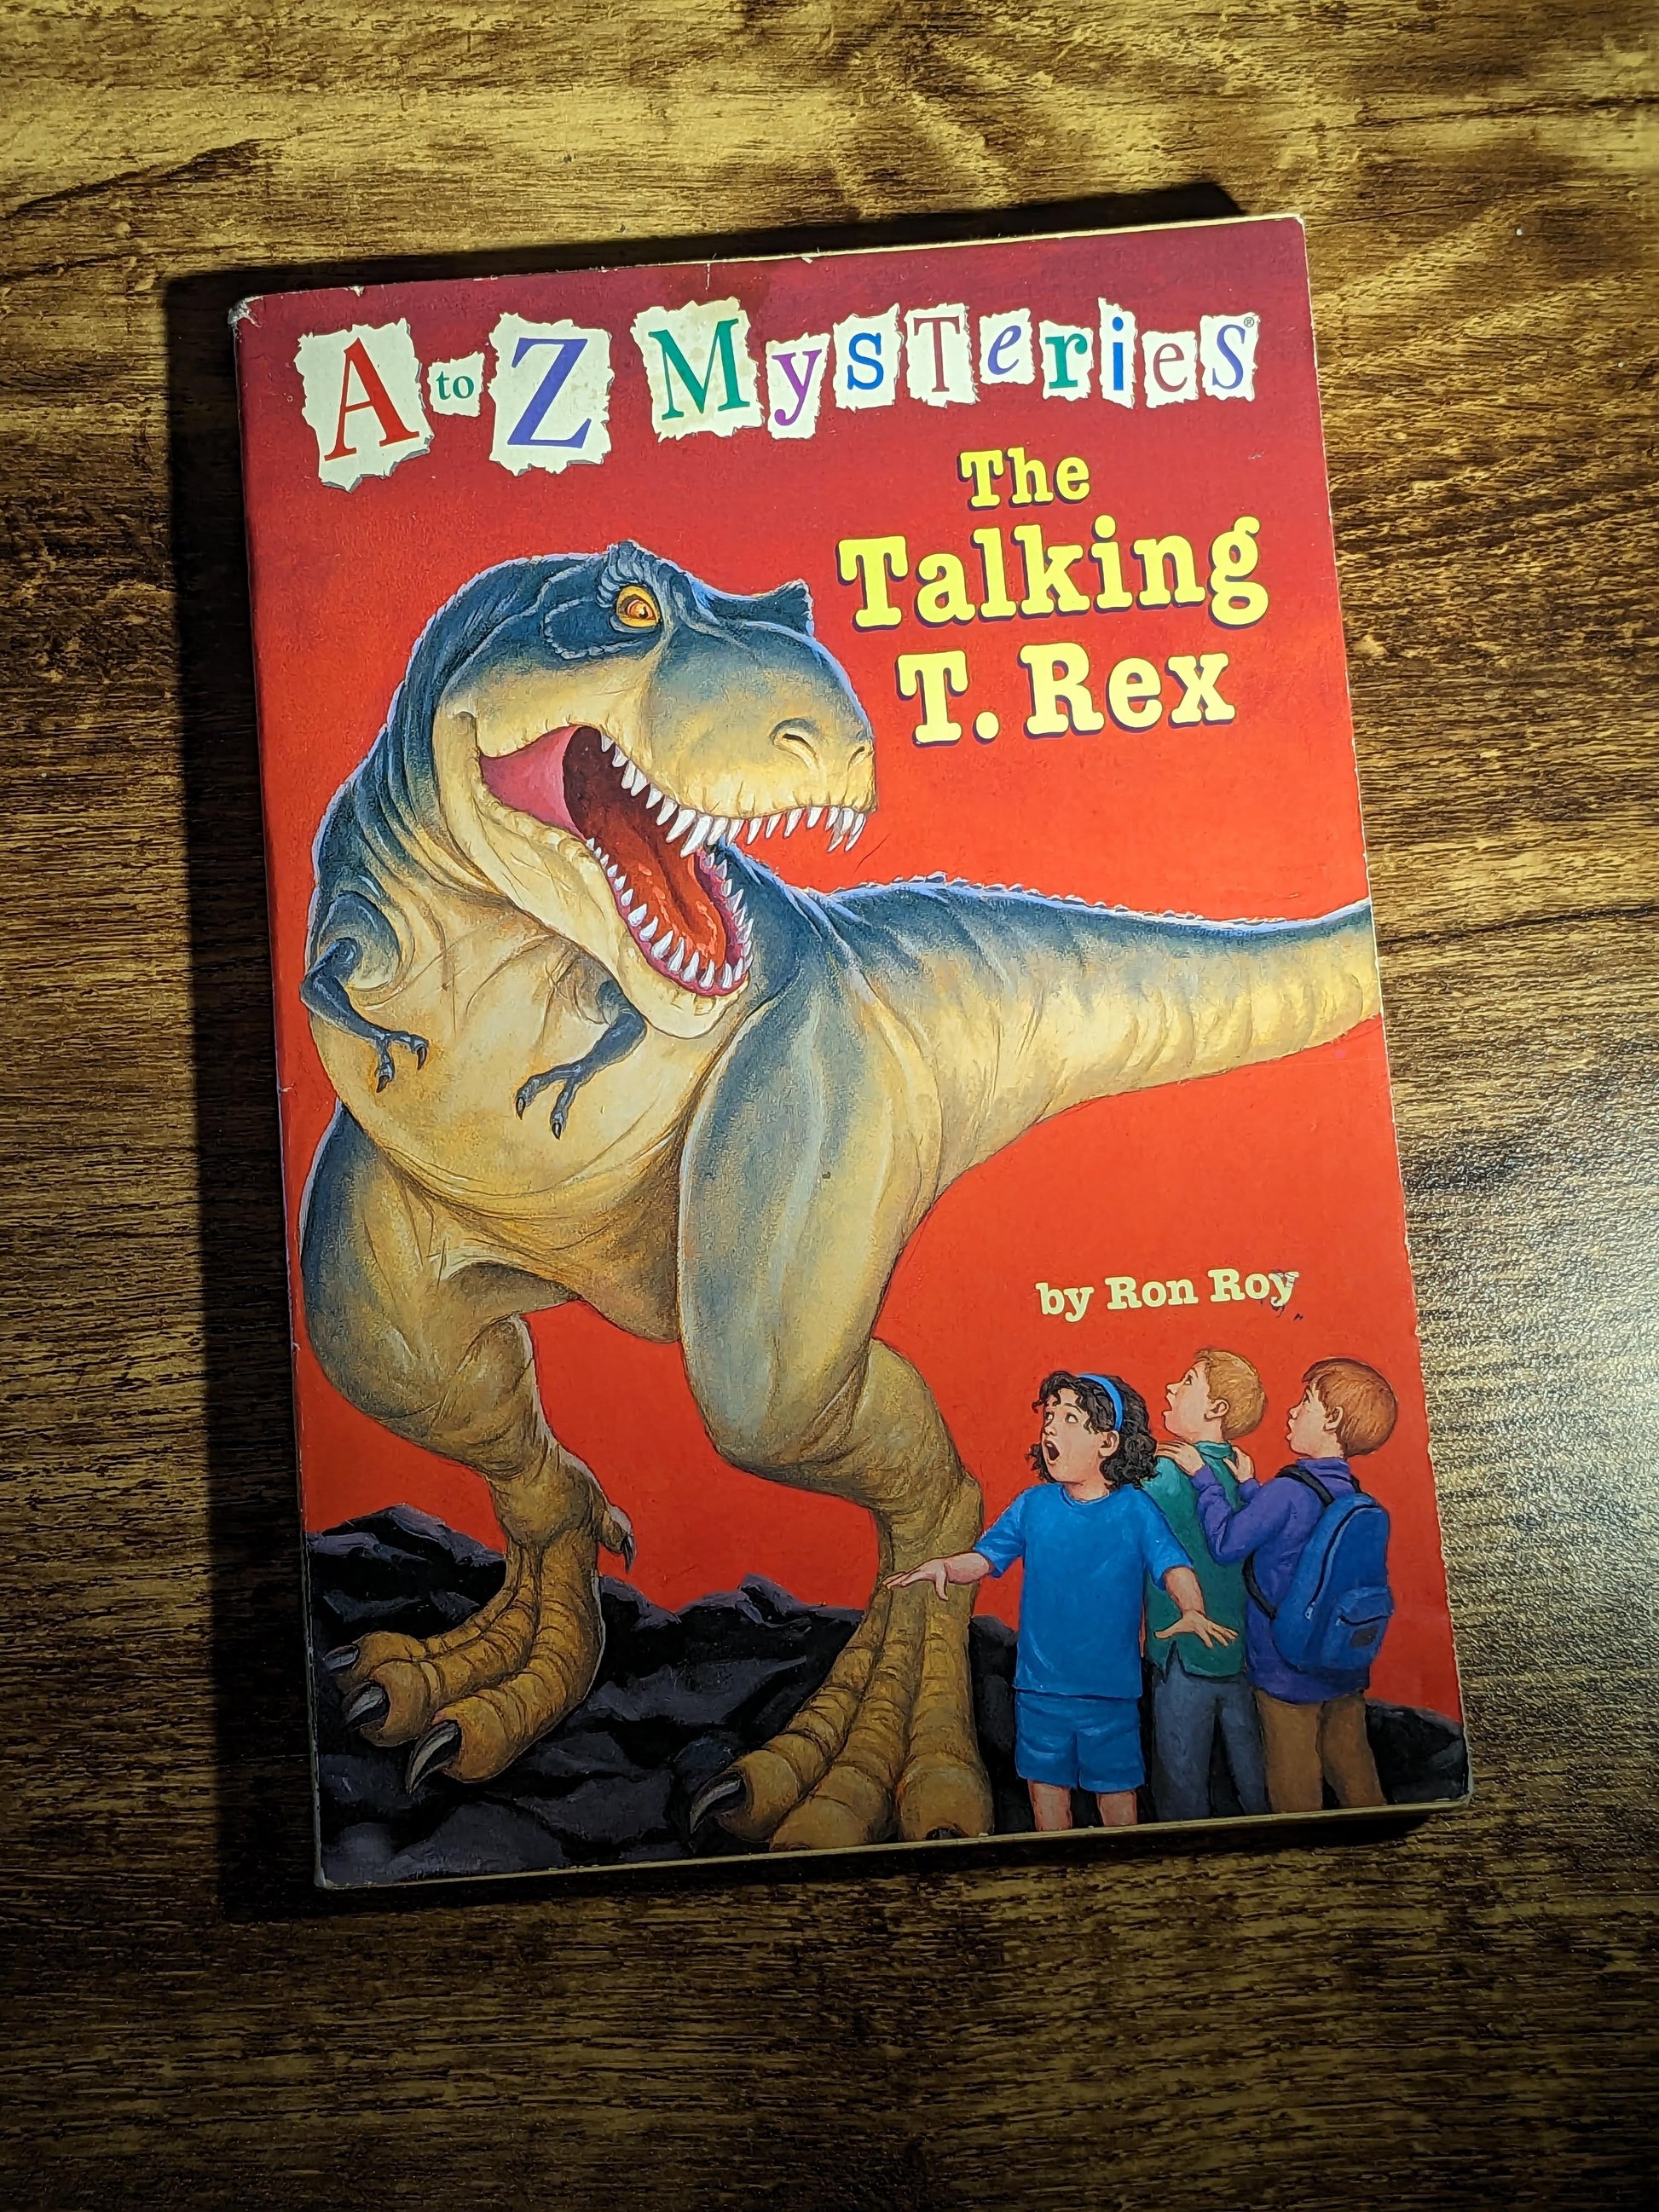 Talking T-Rex (A to Z Mysteries) by Ron Roy - Asylum Books